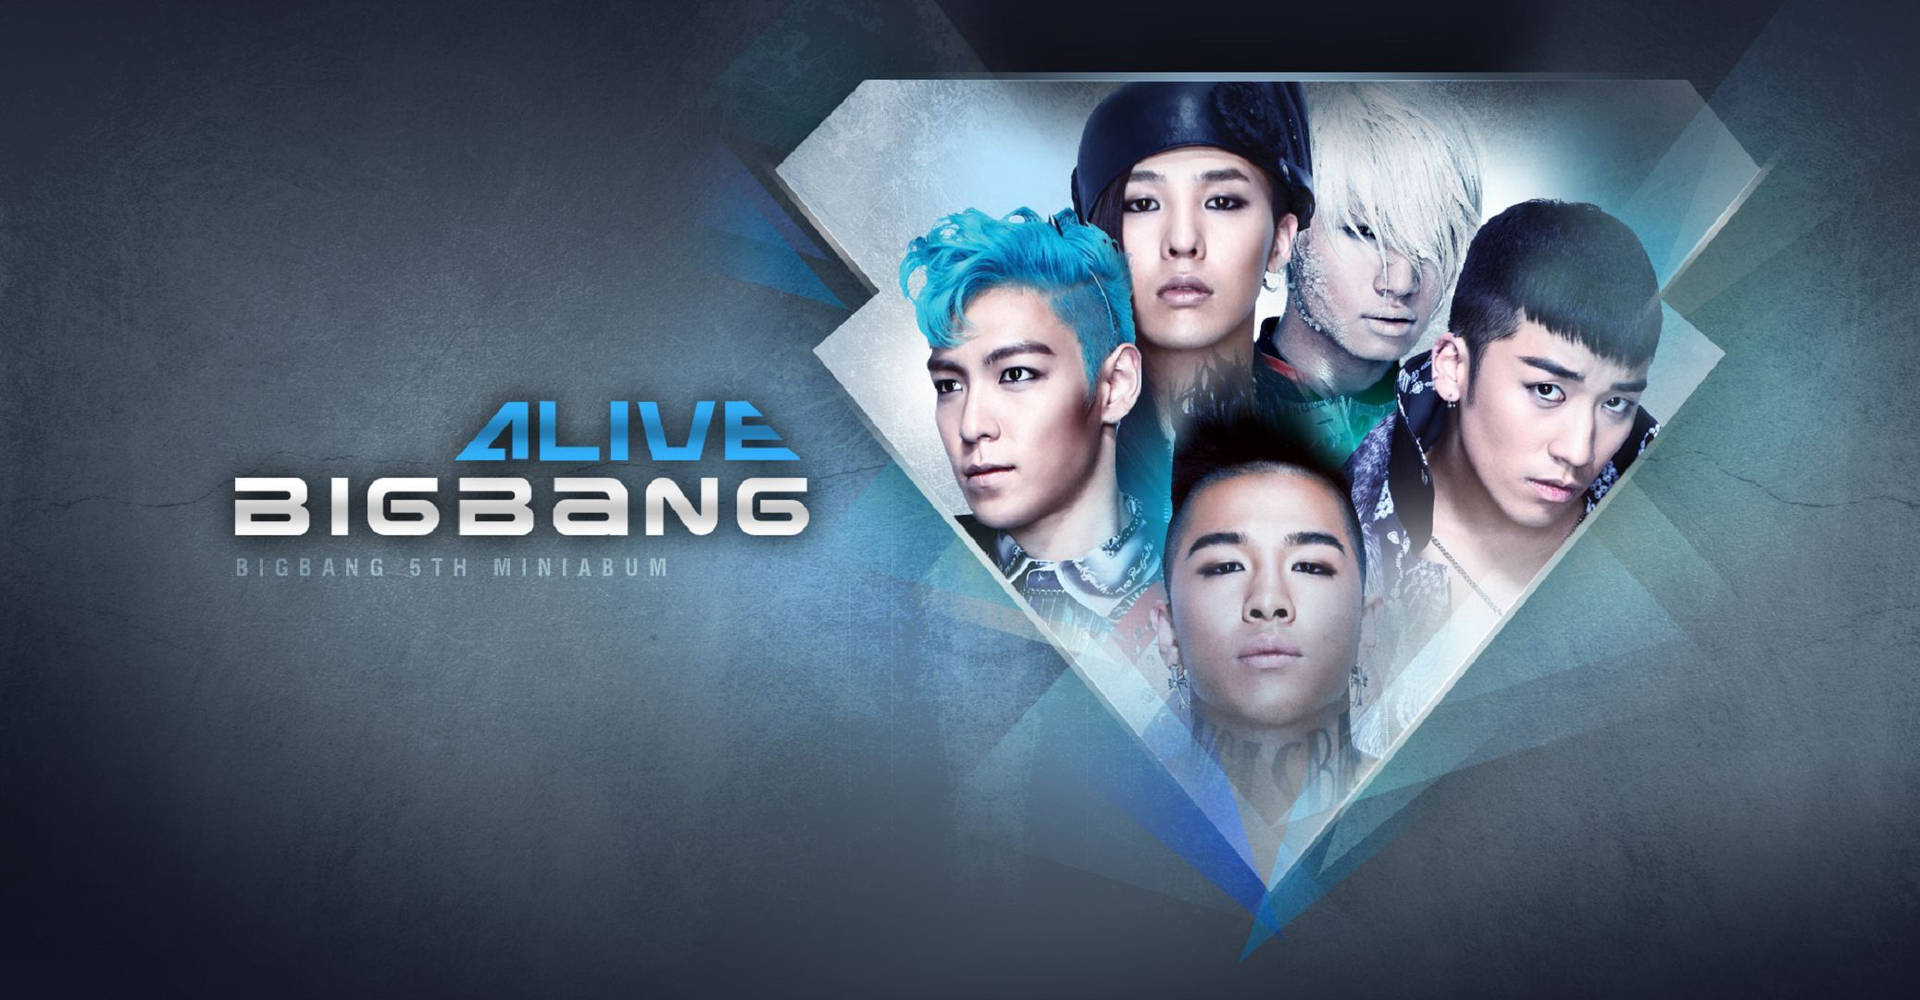 Bigbang Alive 5th Album Cover Background